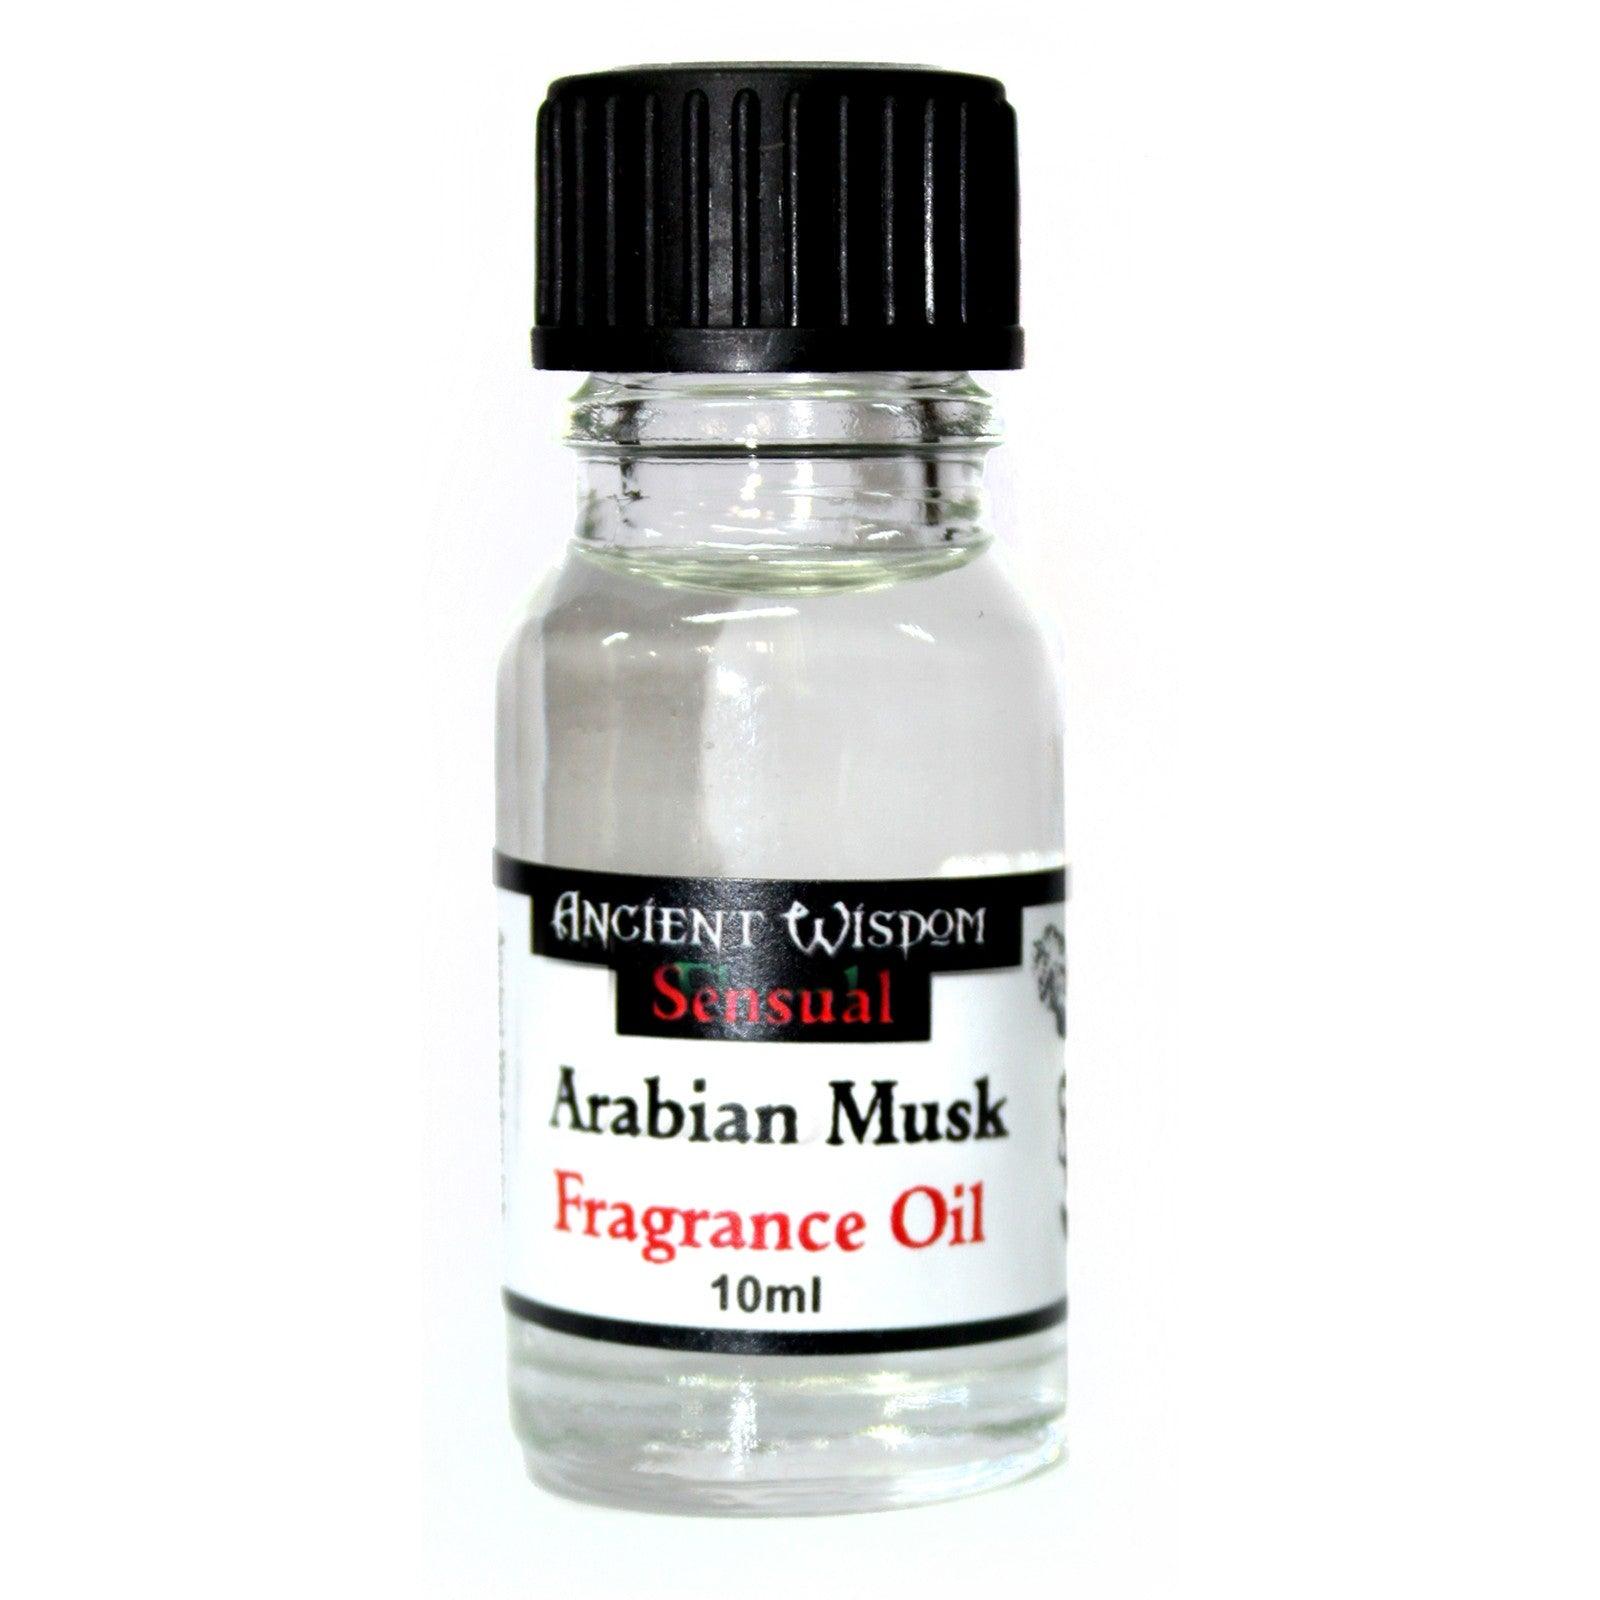 10ml Arabian Musk Fragrance Oil - Charming Spaces